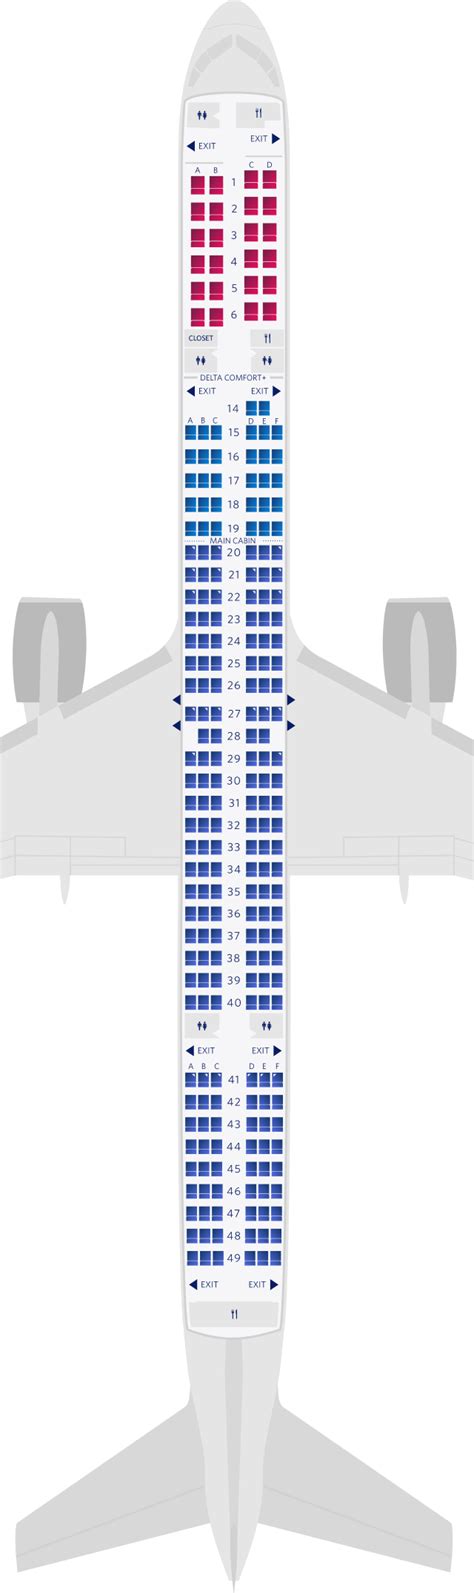 boeing 757-300 seat map